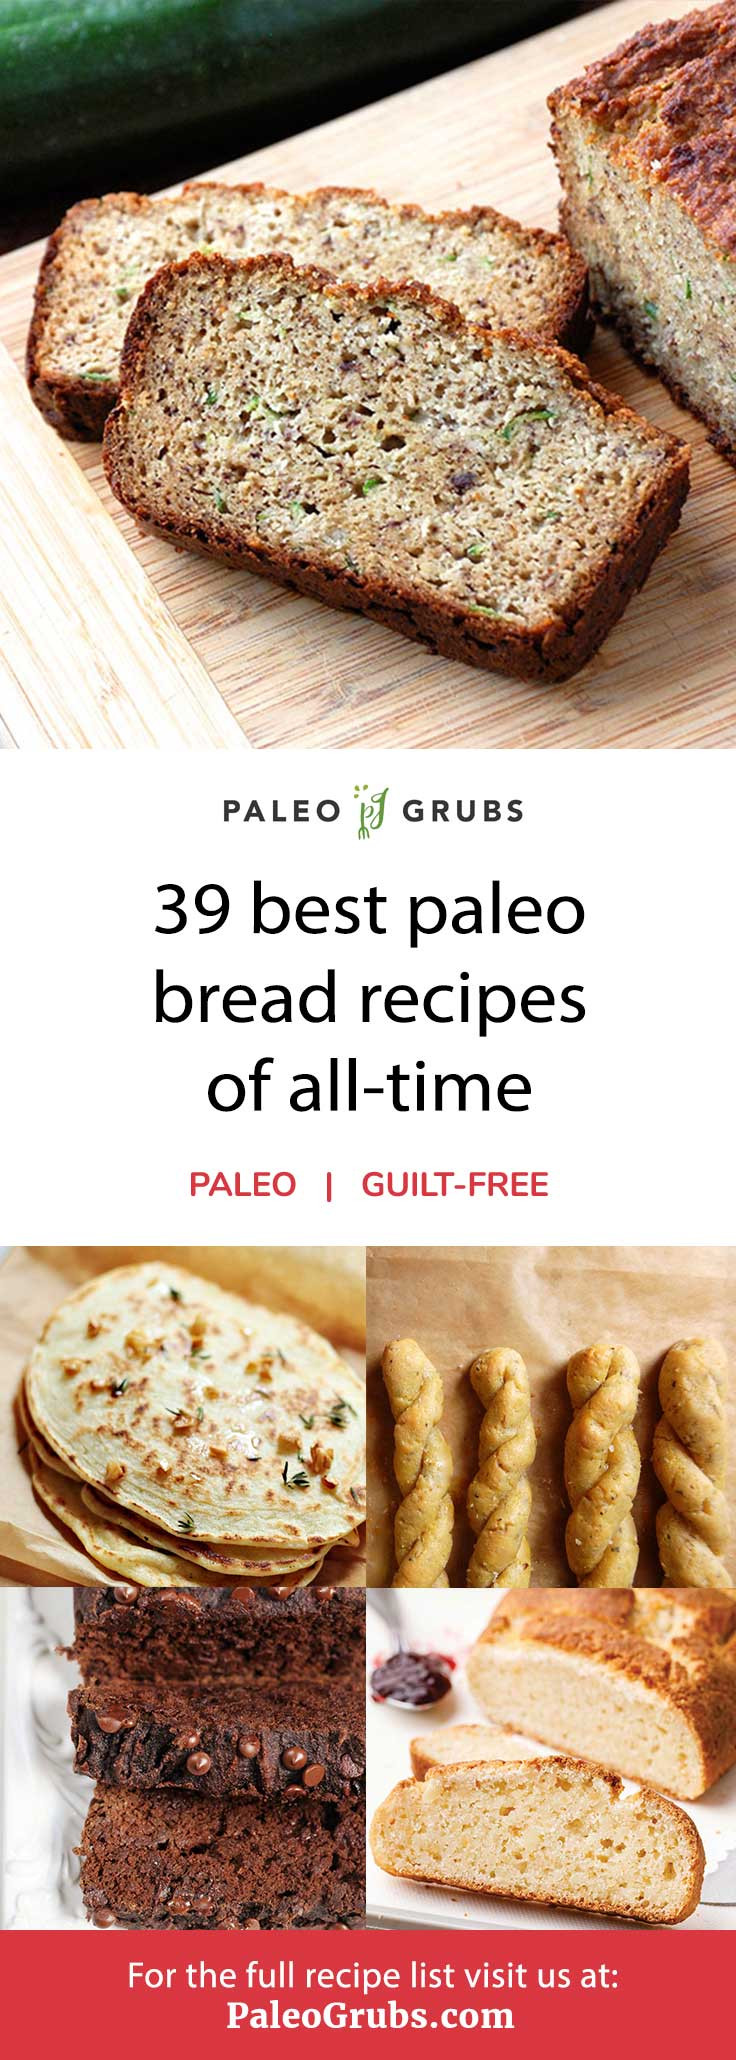 Best Paleo Bread Recipe
 39 Easy Paleo Bread Recipes The Ultimate Guide to Paleo